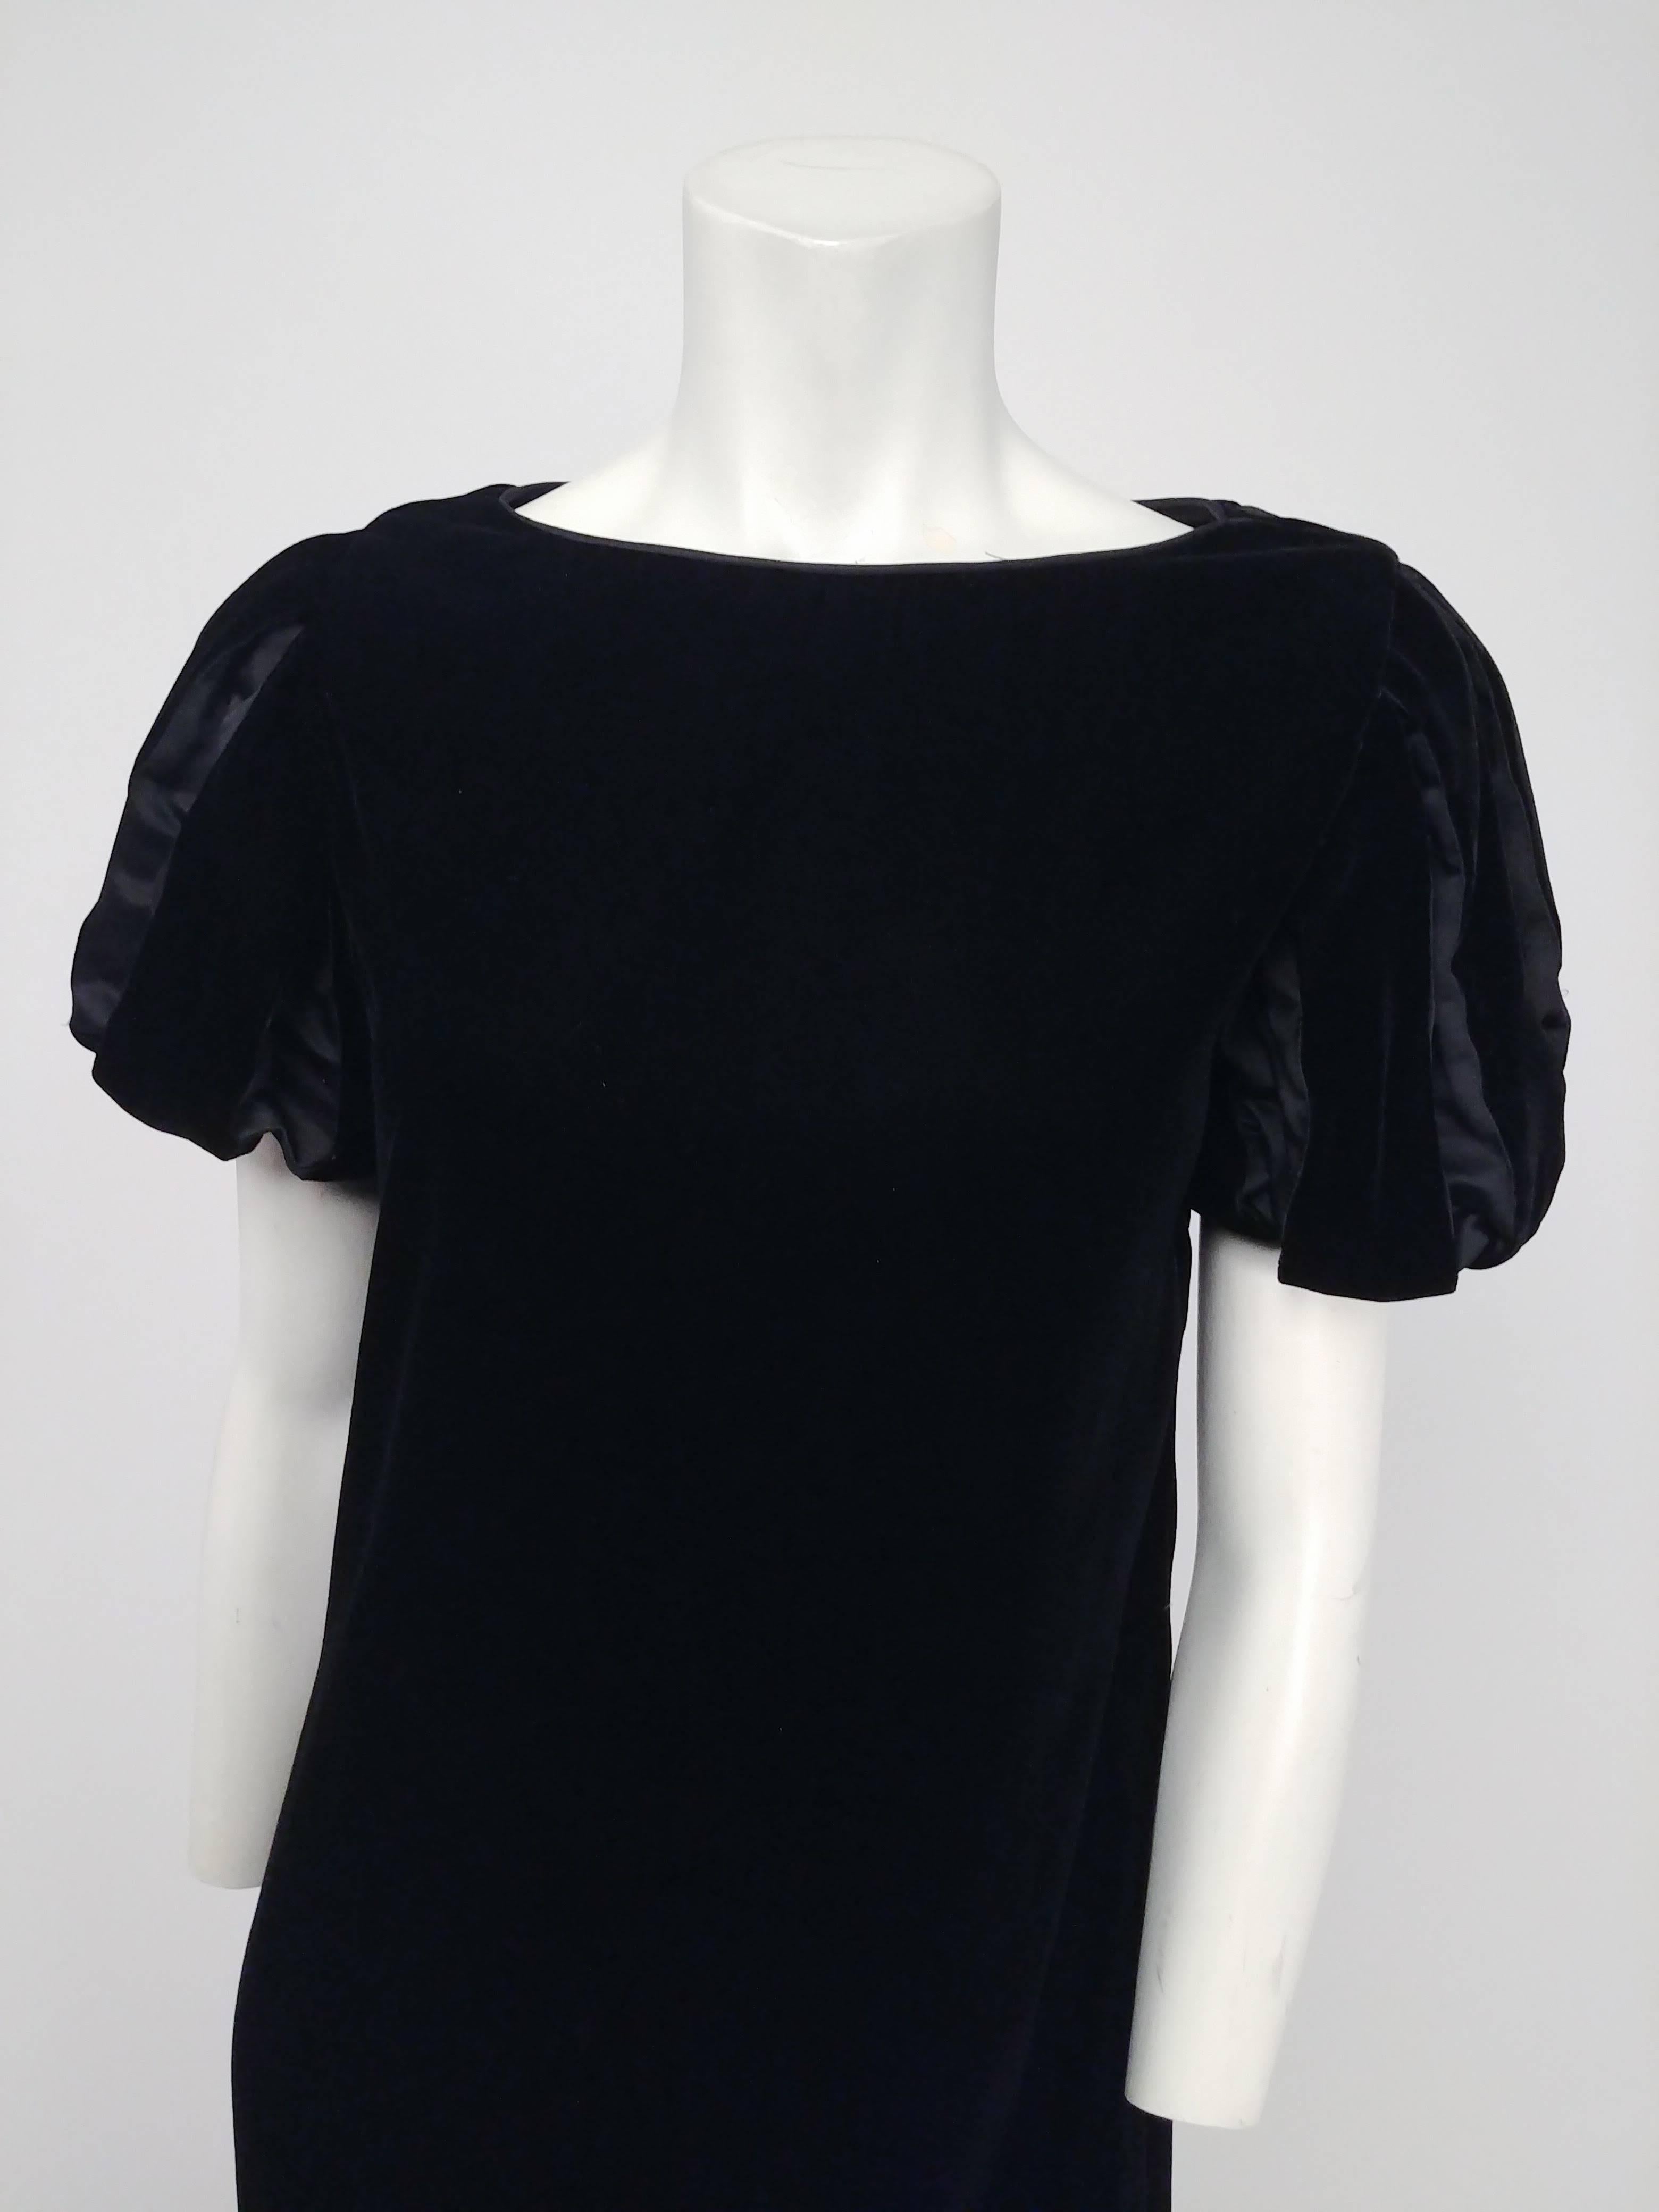 Victor Costa Black Velvet Slashed Sleeve Dress, 1980s. Velvet shift dress with puffed faux-slashed sleeves in the Tudor style. Zips up back. 